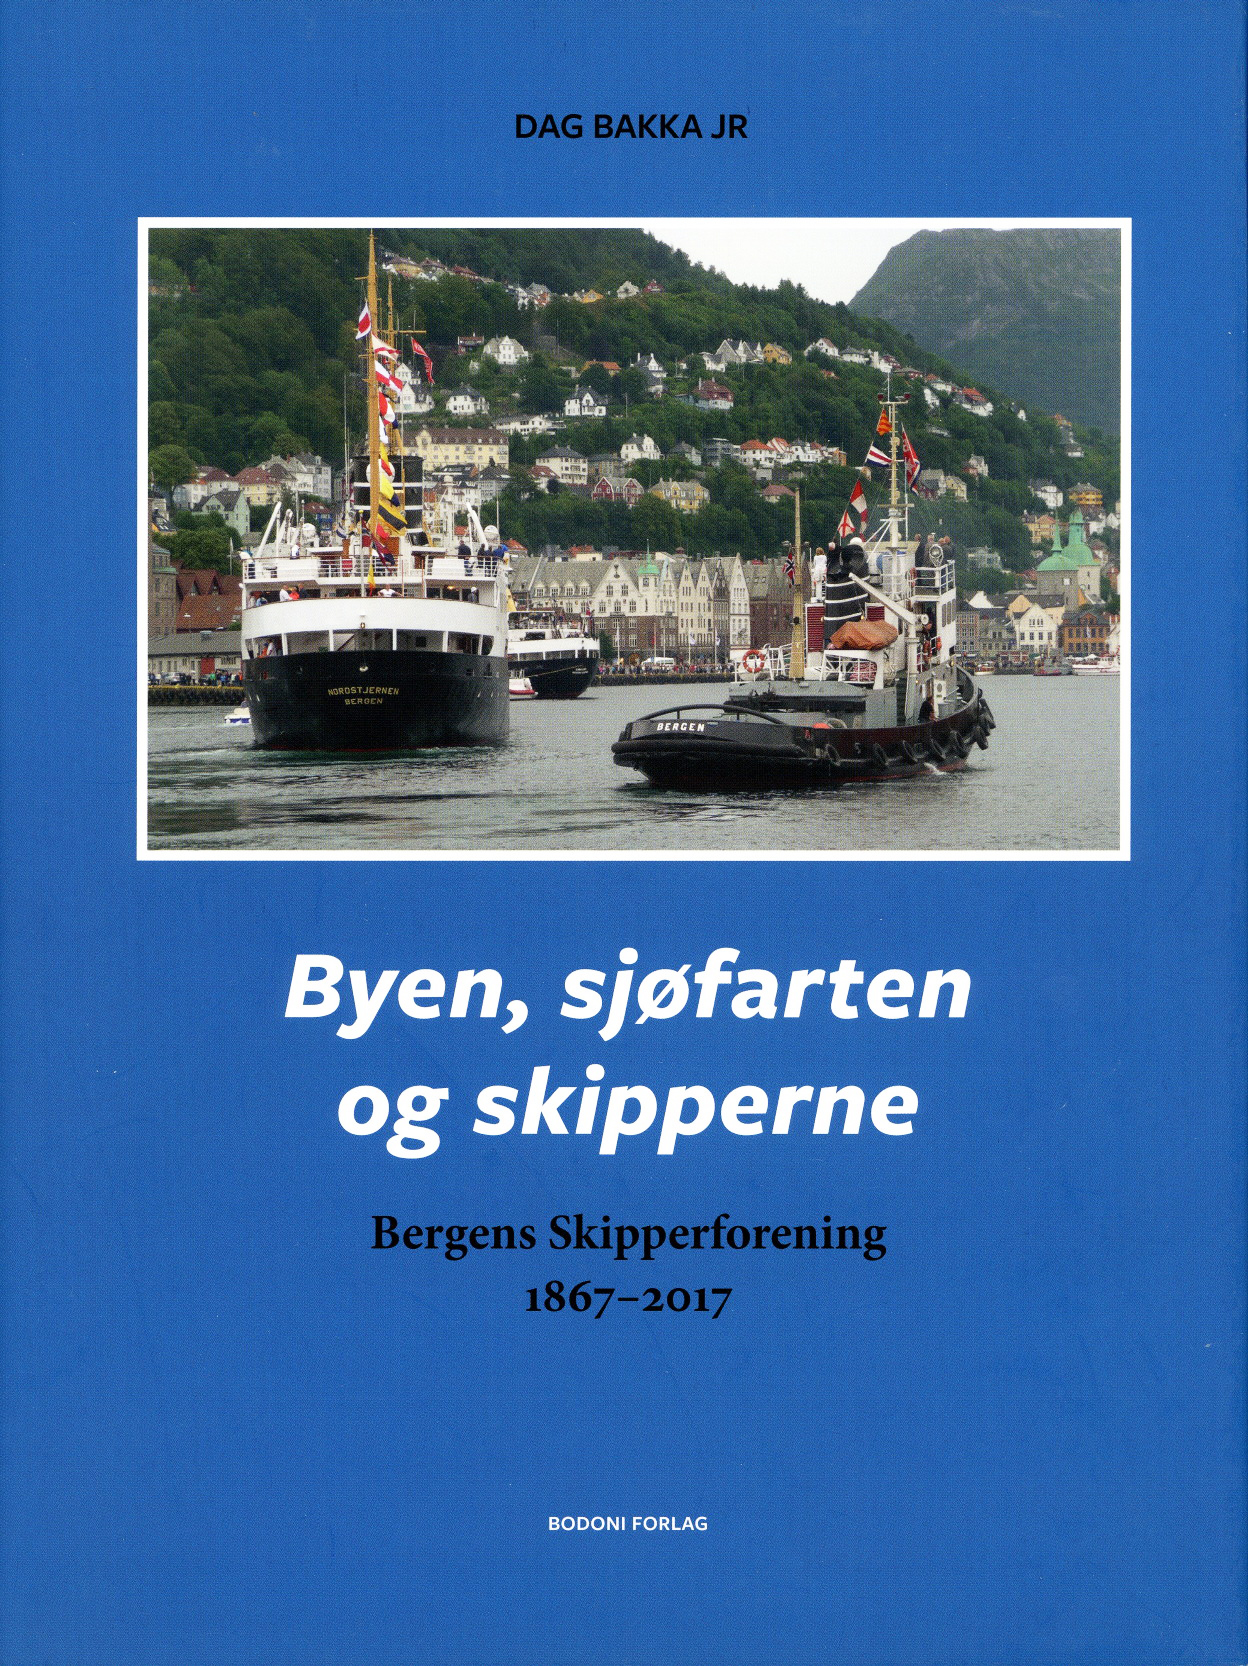 Bergens Skipperforening 2017